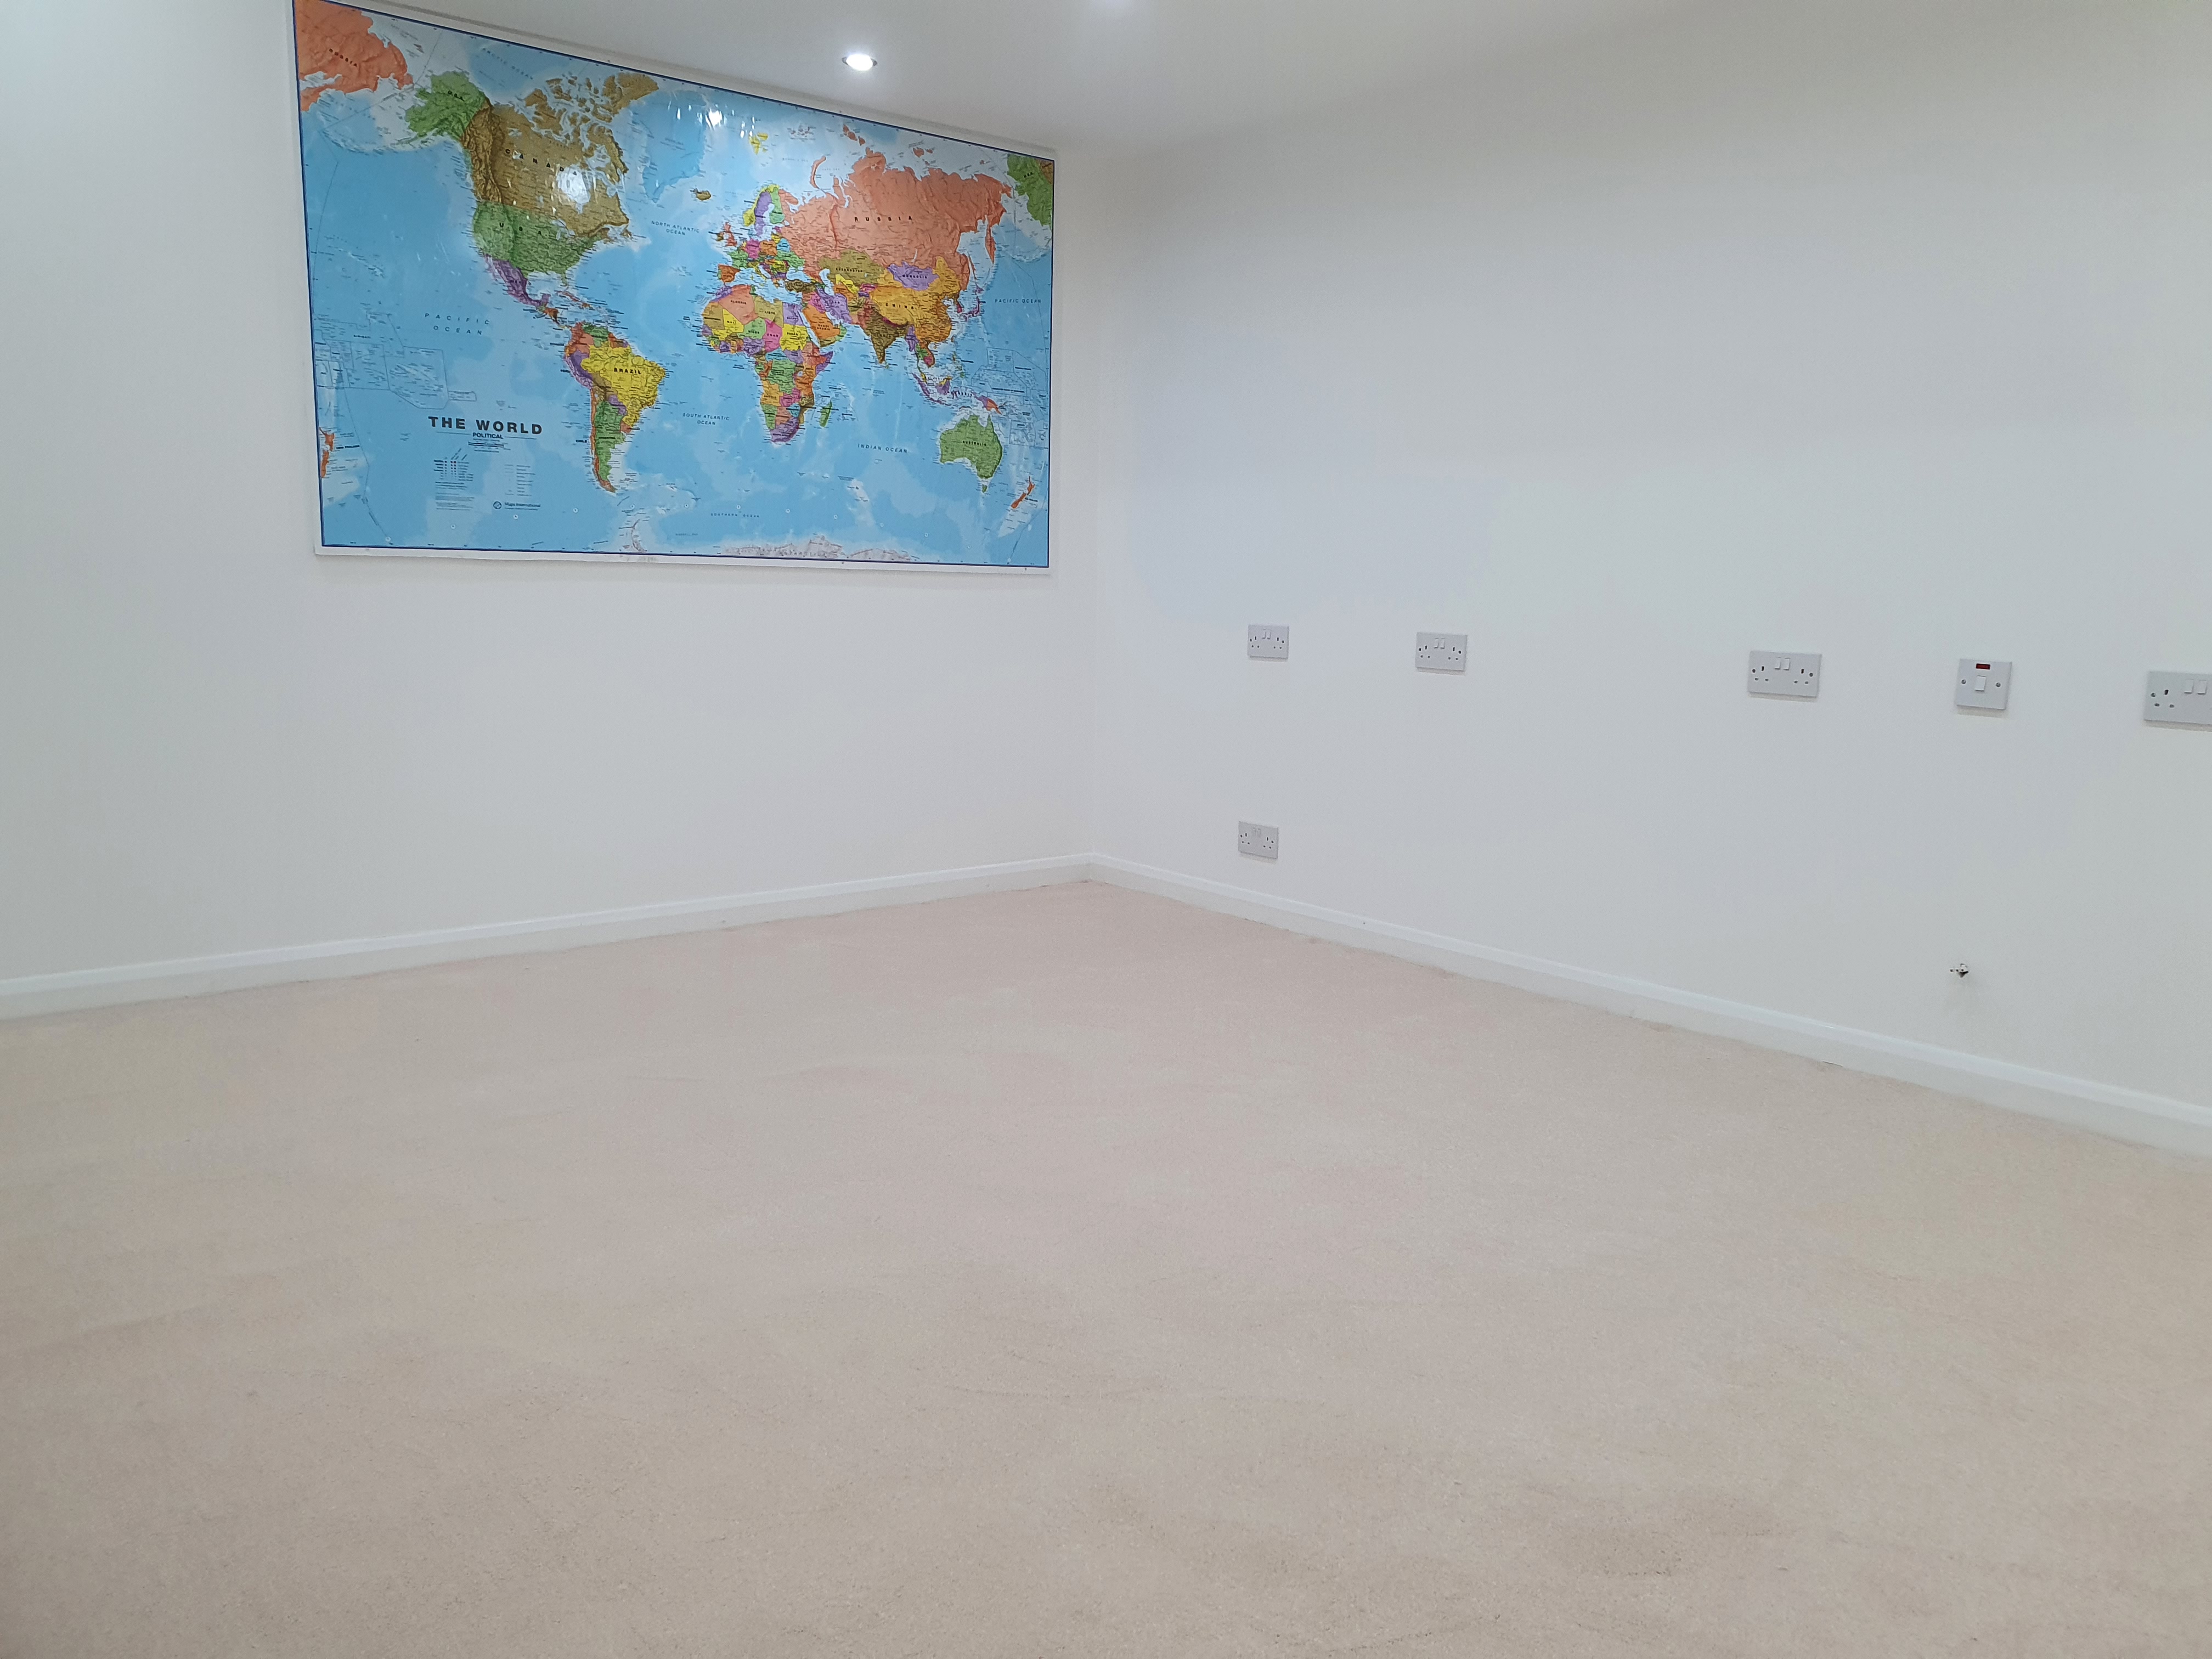 John Lewis Living Room or Bedroom Carpet in Light Beige Colour. 6m x 4m on the roll. Rrp £528